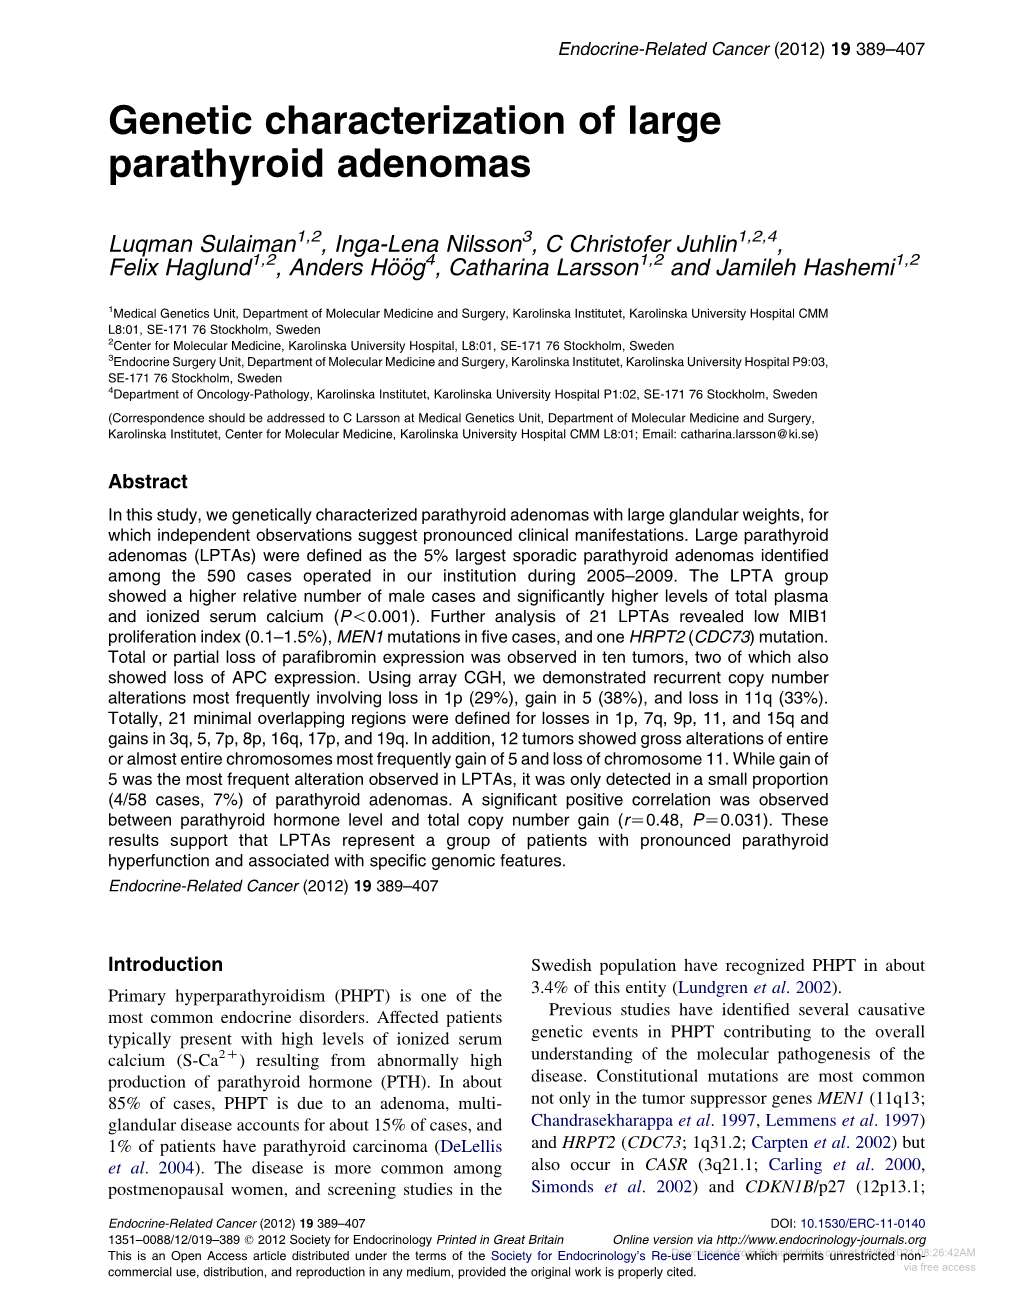 Genetic Characterization of Large Parathyroid Adenomas